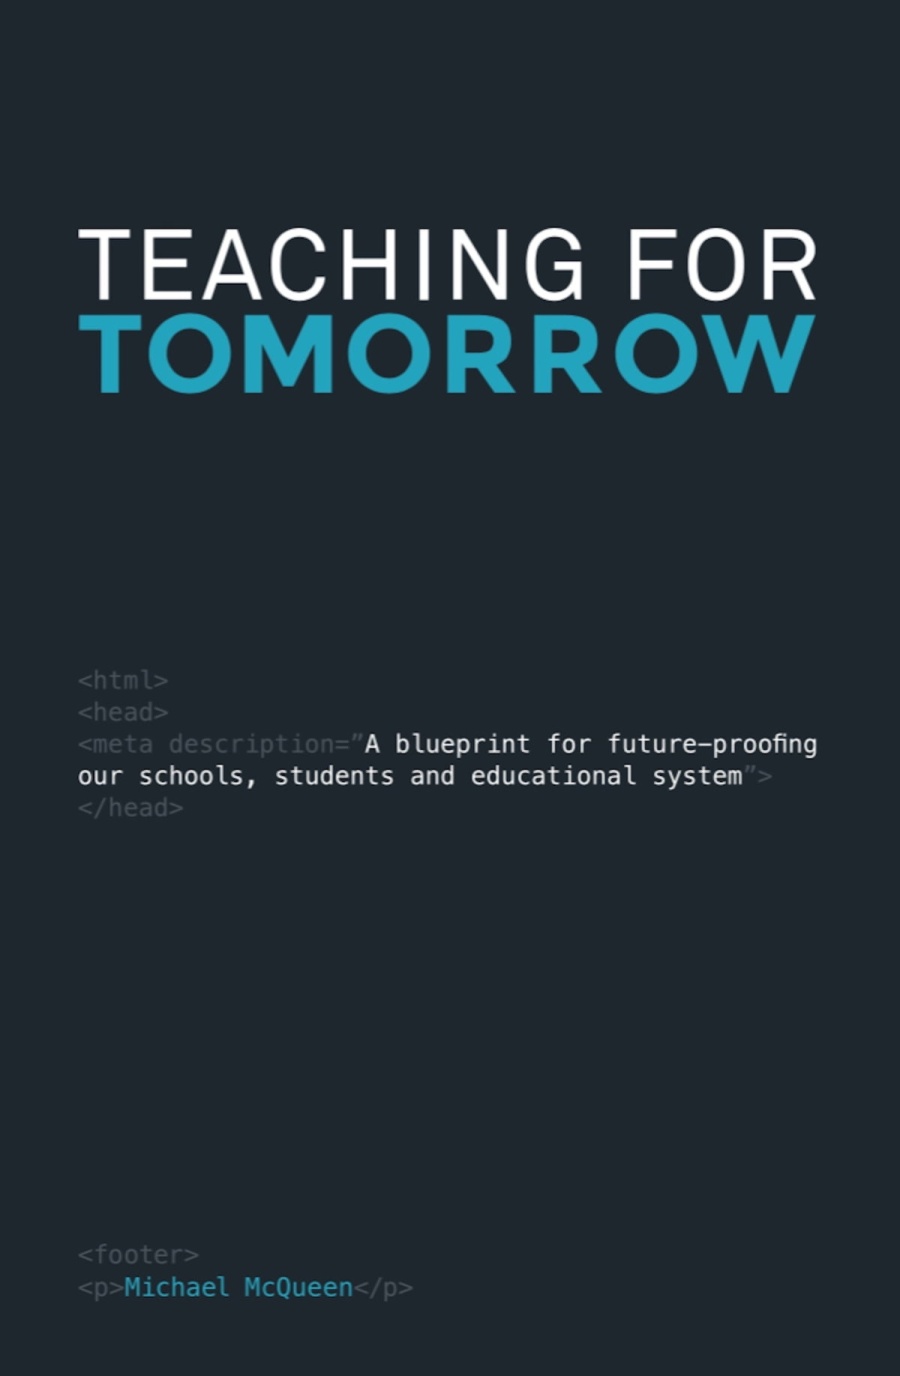 Teaching for Tomorrow (PD Training Curriculum)